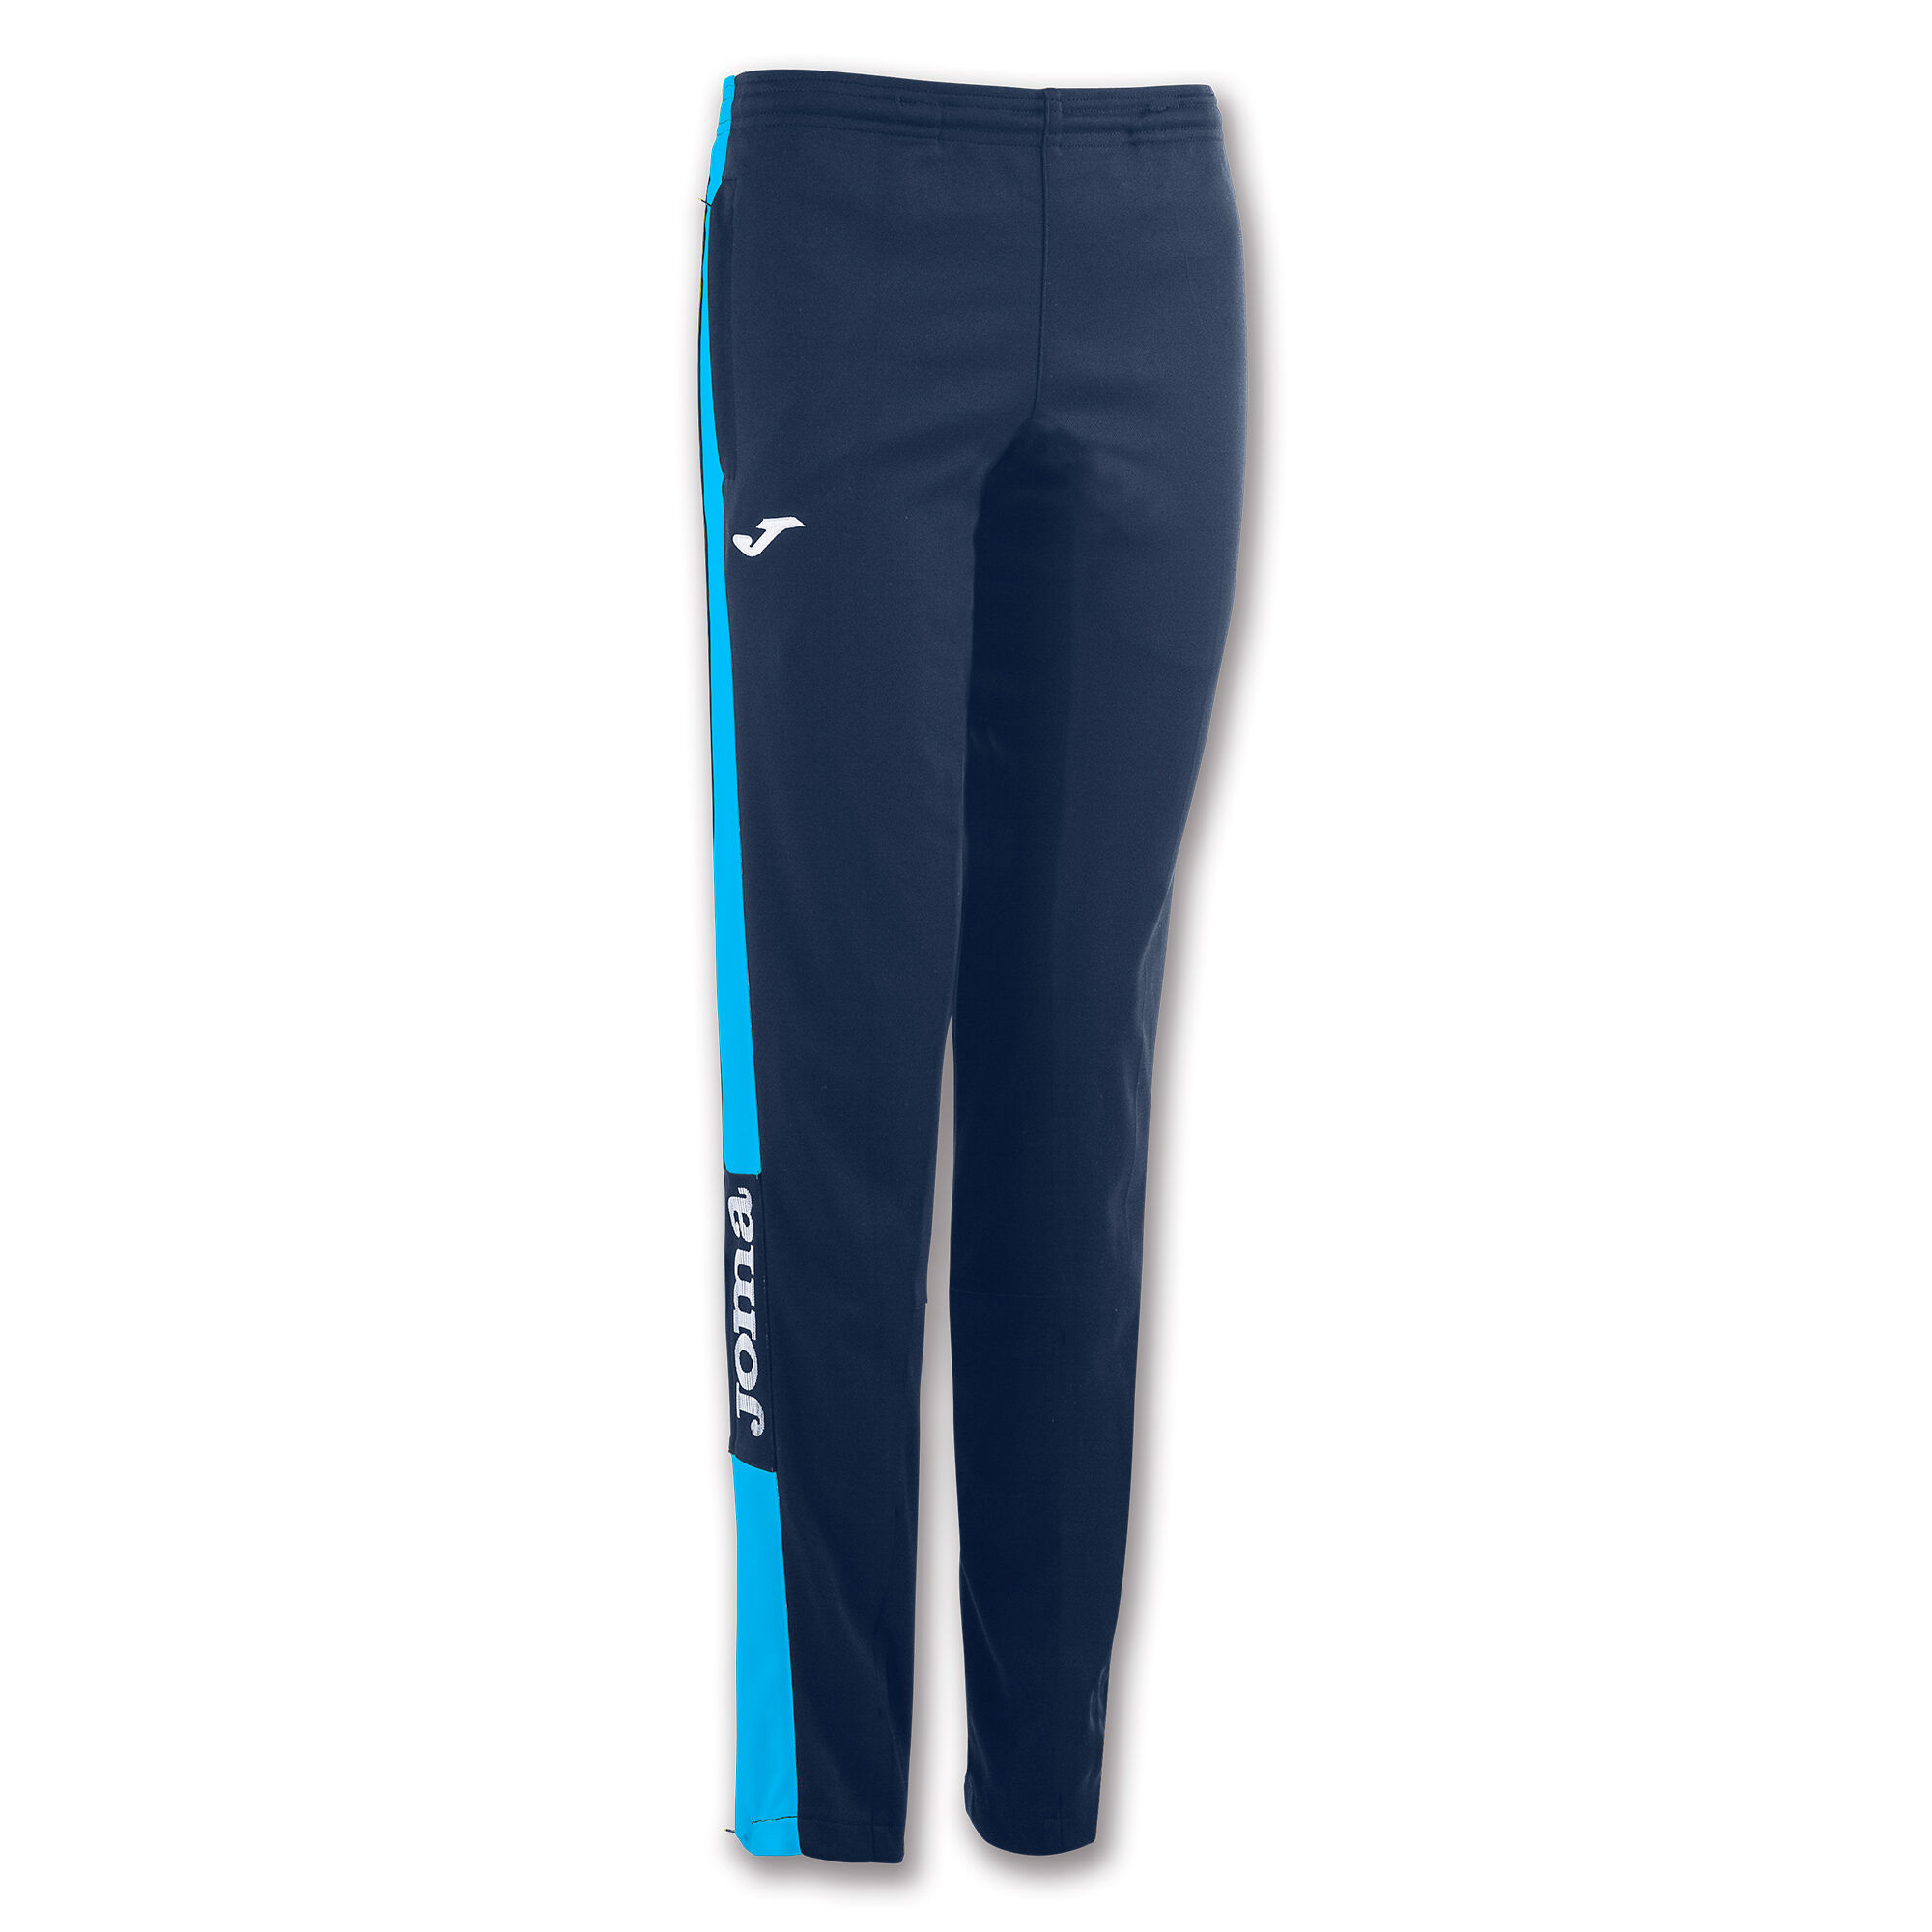 Pantalone lungo donna Championship IV blu navy turchese fluorescente